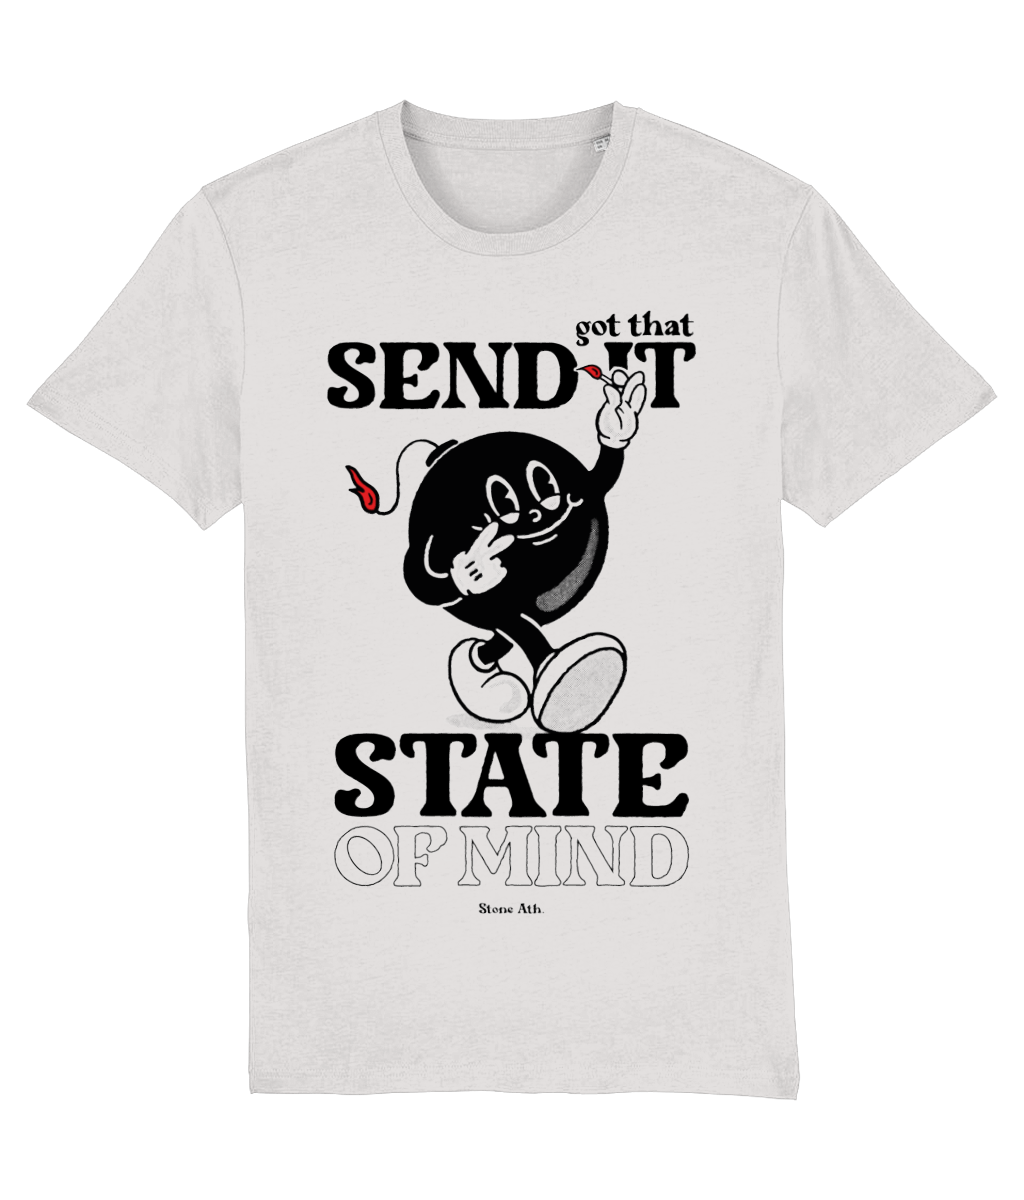 Send it state of mind tee